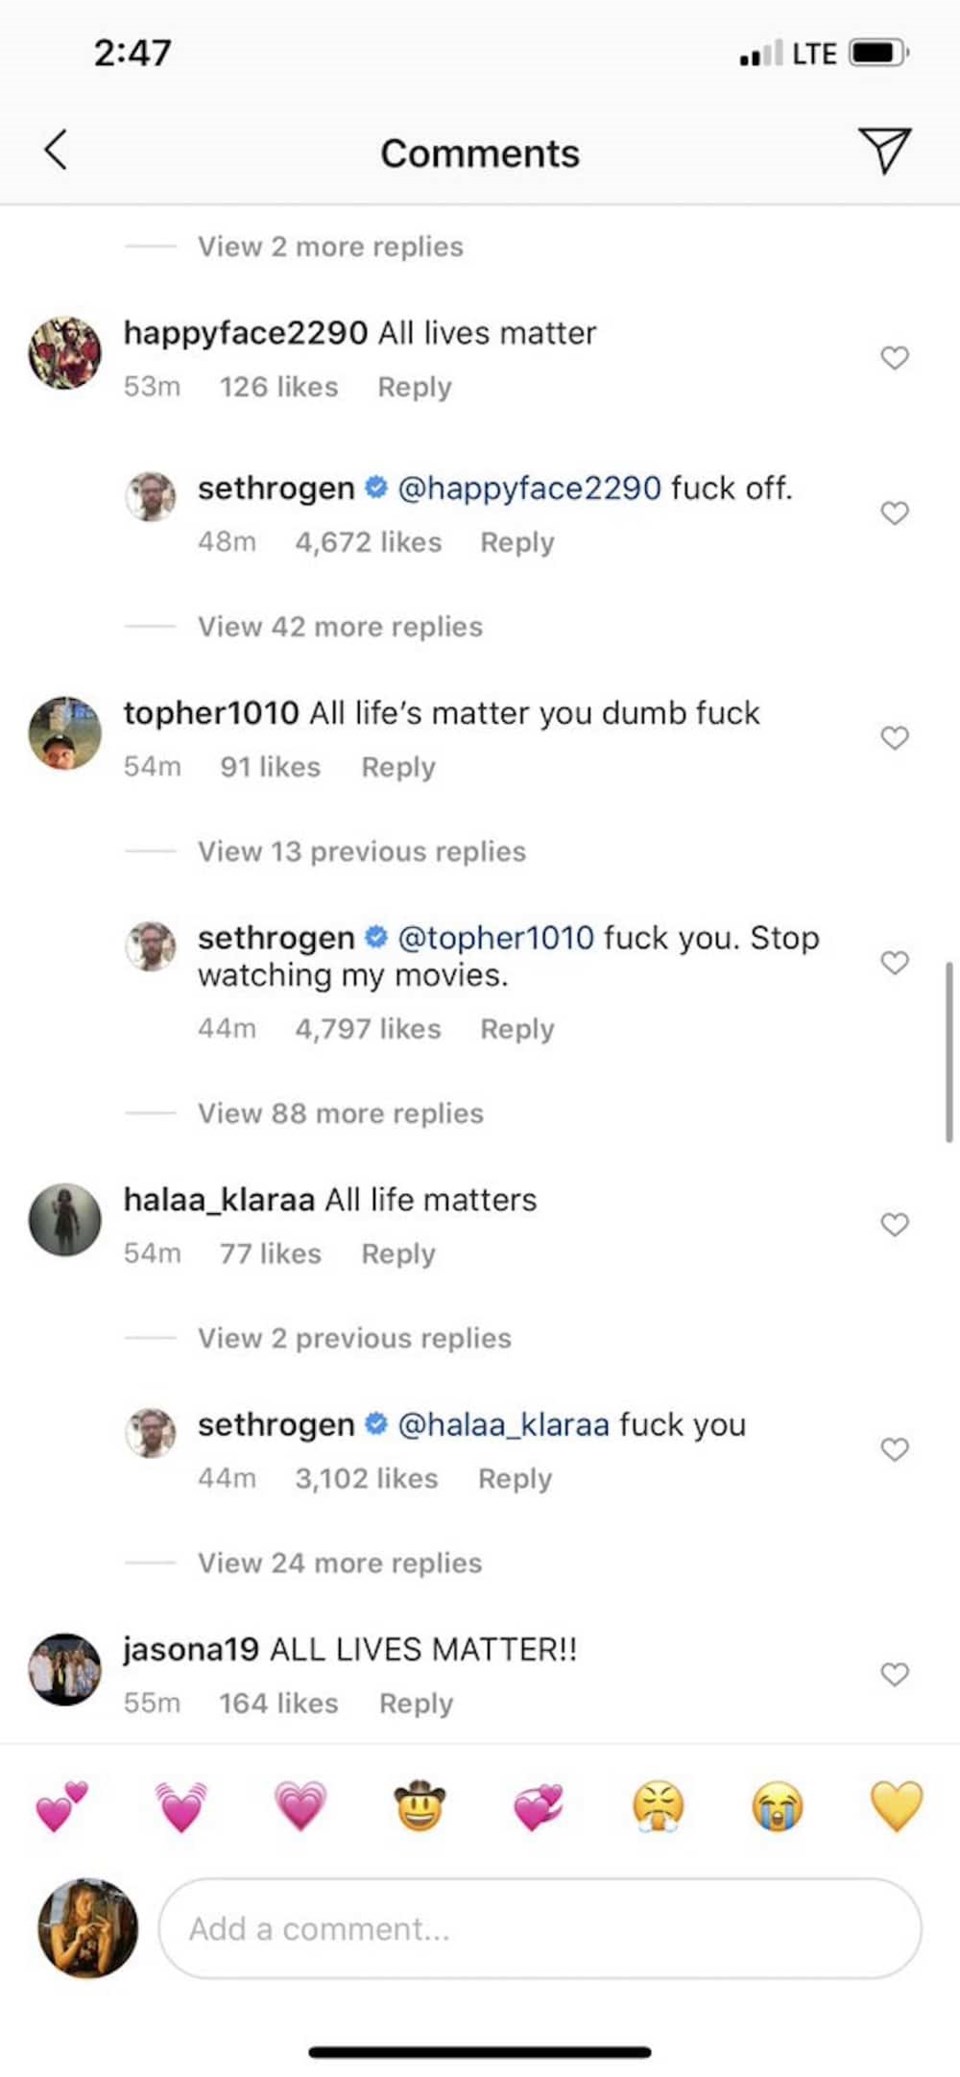 Seth Rogen blasts Instagram followers criticizing Black Lives Matter support